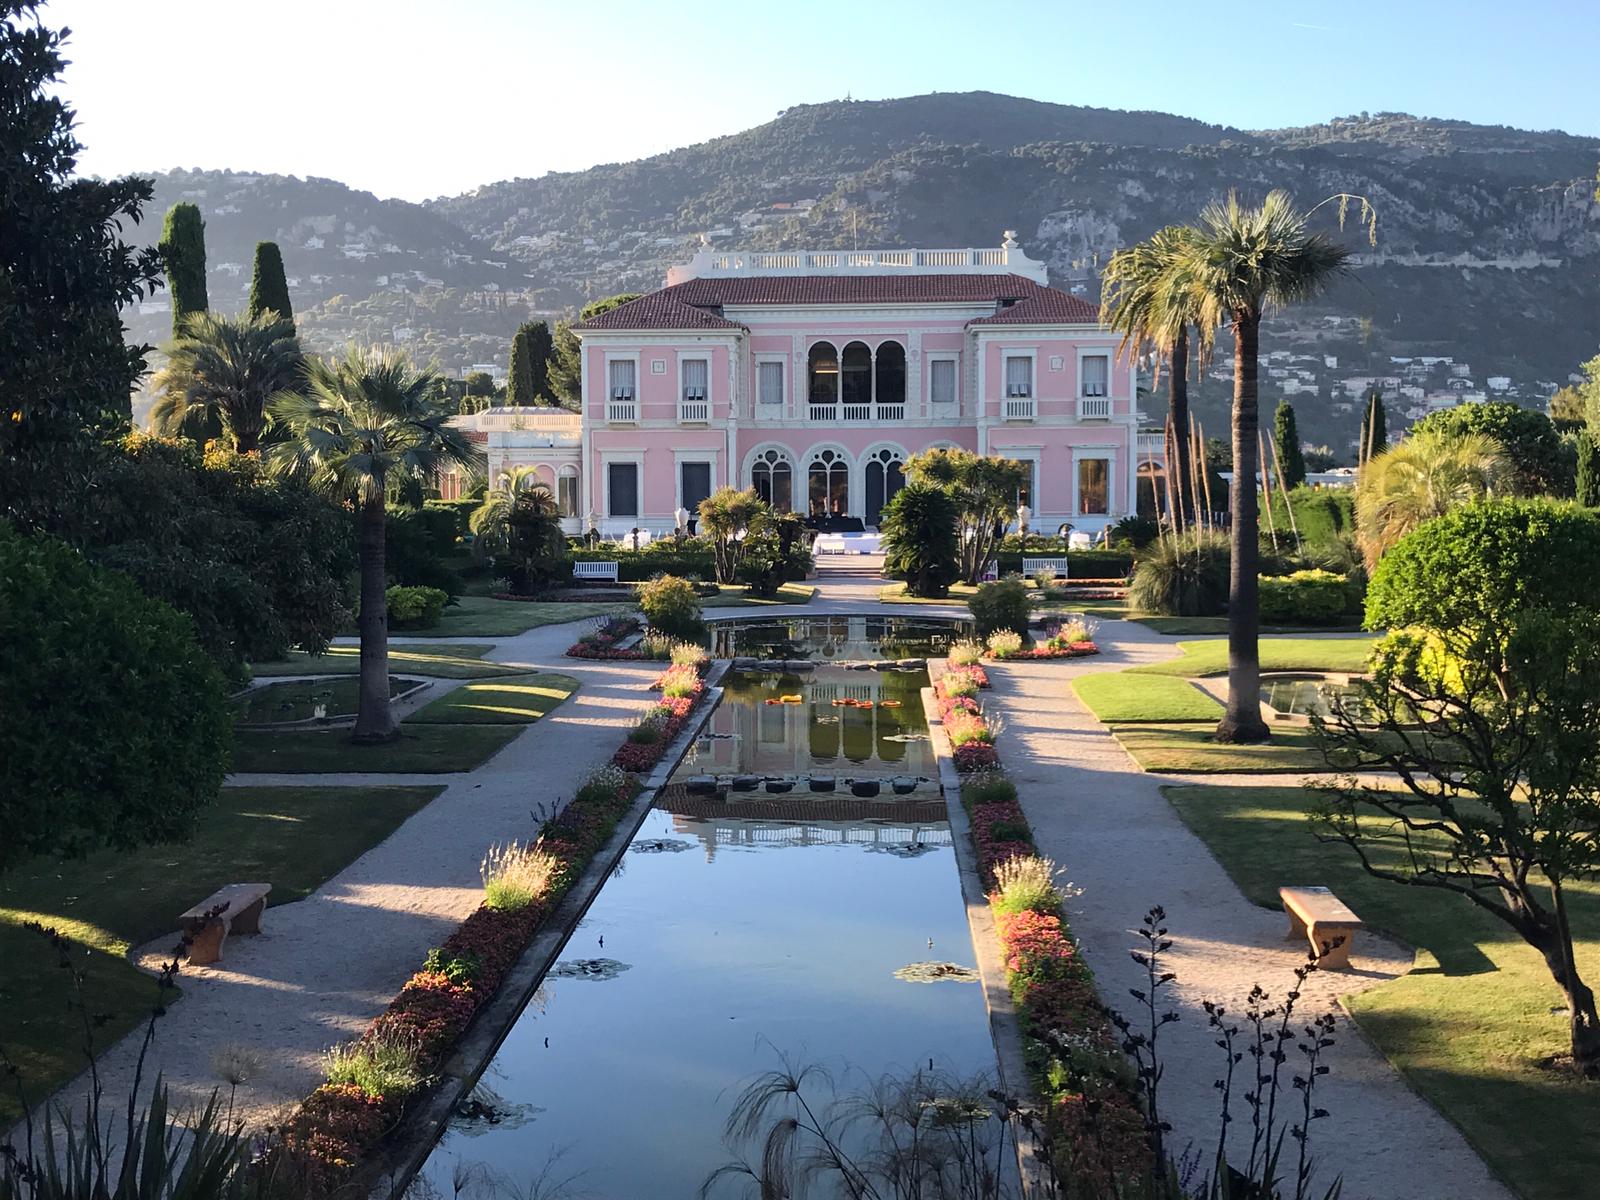 Artsoirée Villa Ephrussi de Rothschild | 12 juin 2019